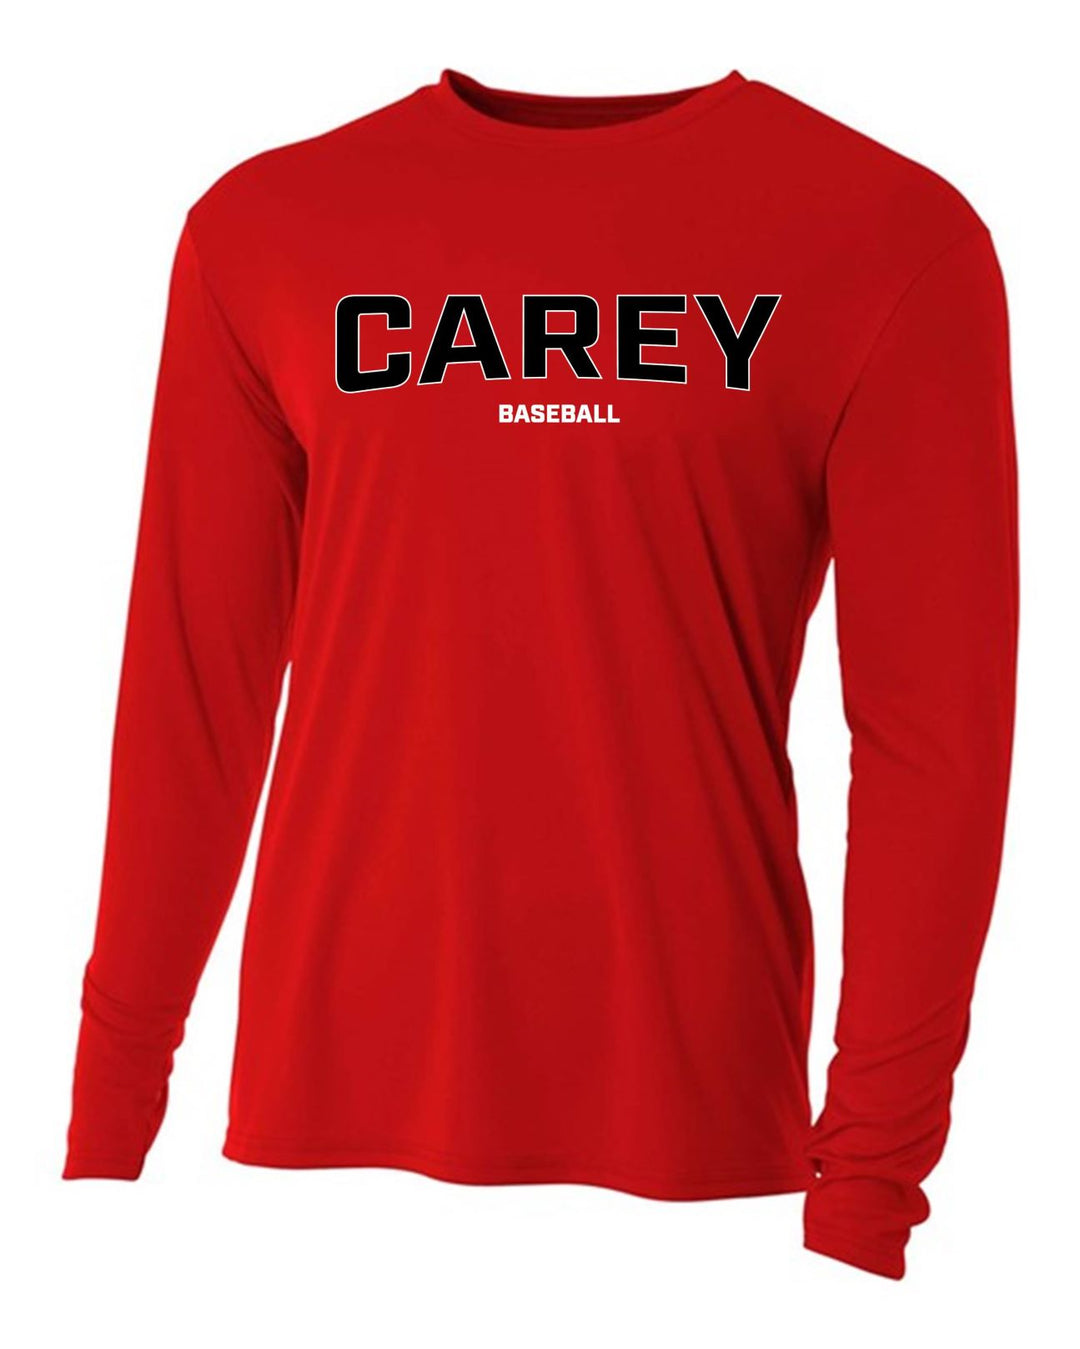 WCU Baseball Men's Long-Sleeve Performance Shirt WCU Baseball Red CAREY - Third Coast Soccer